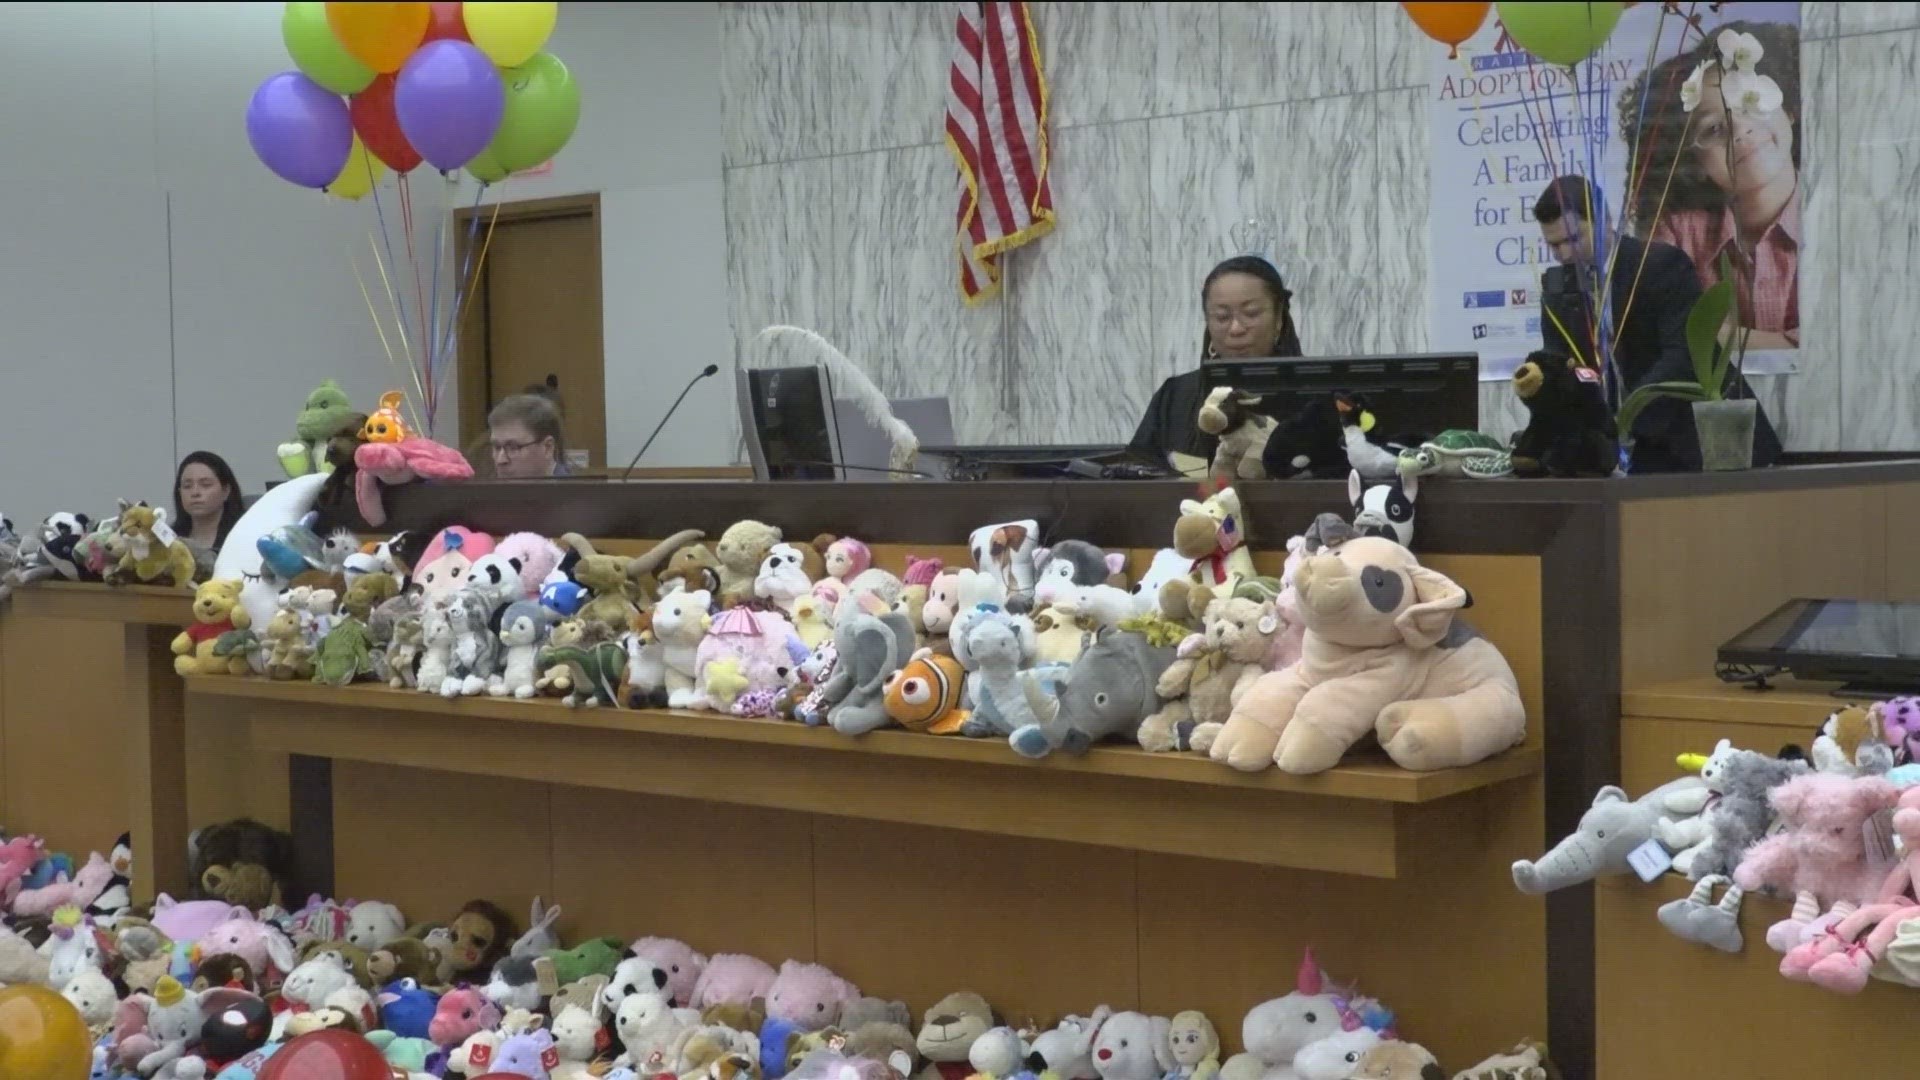 10 families made their adoptions final on Austin Adoption Day.